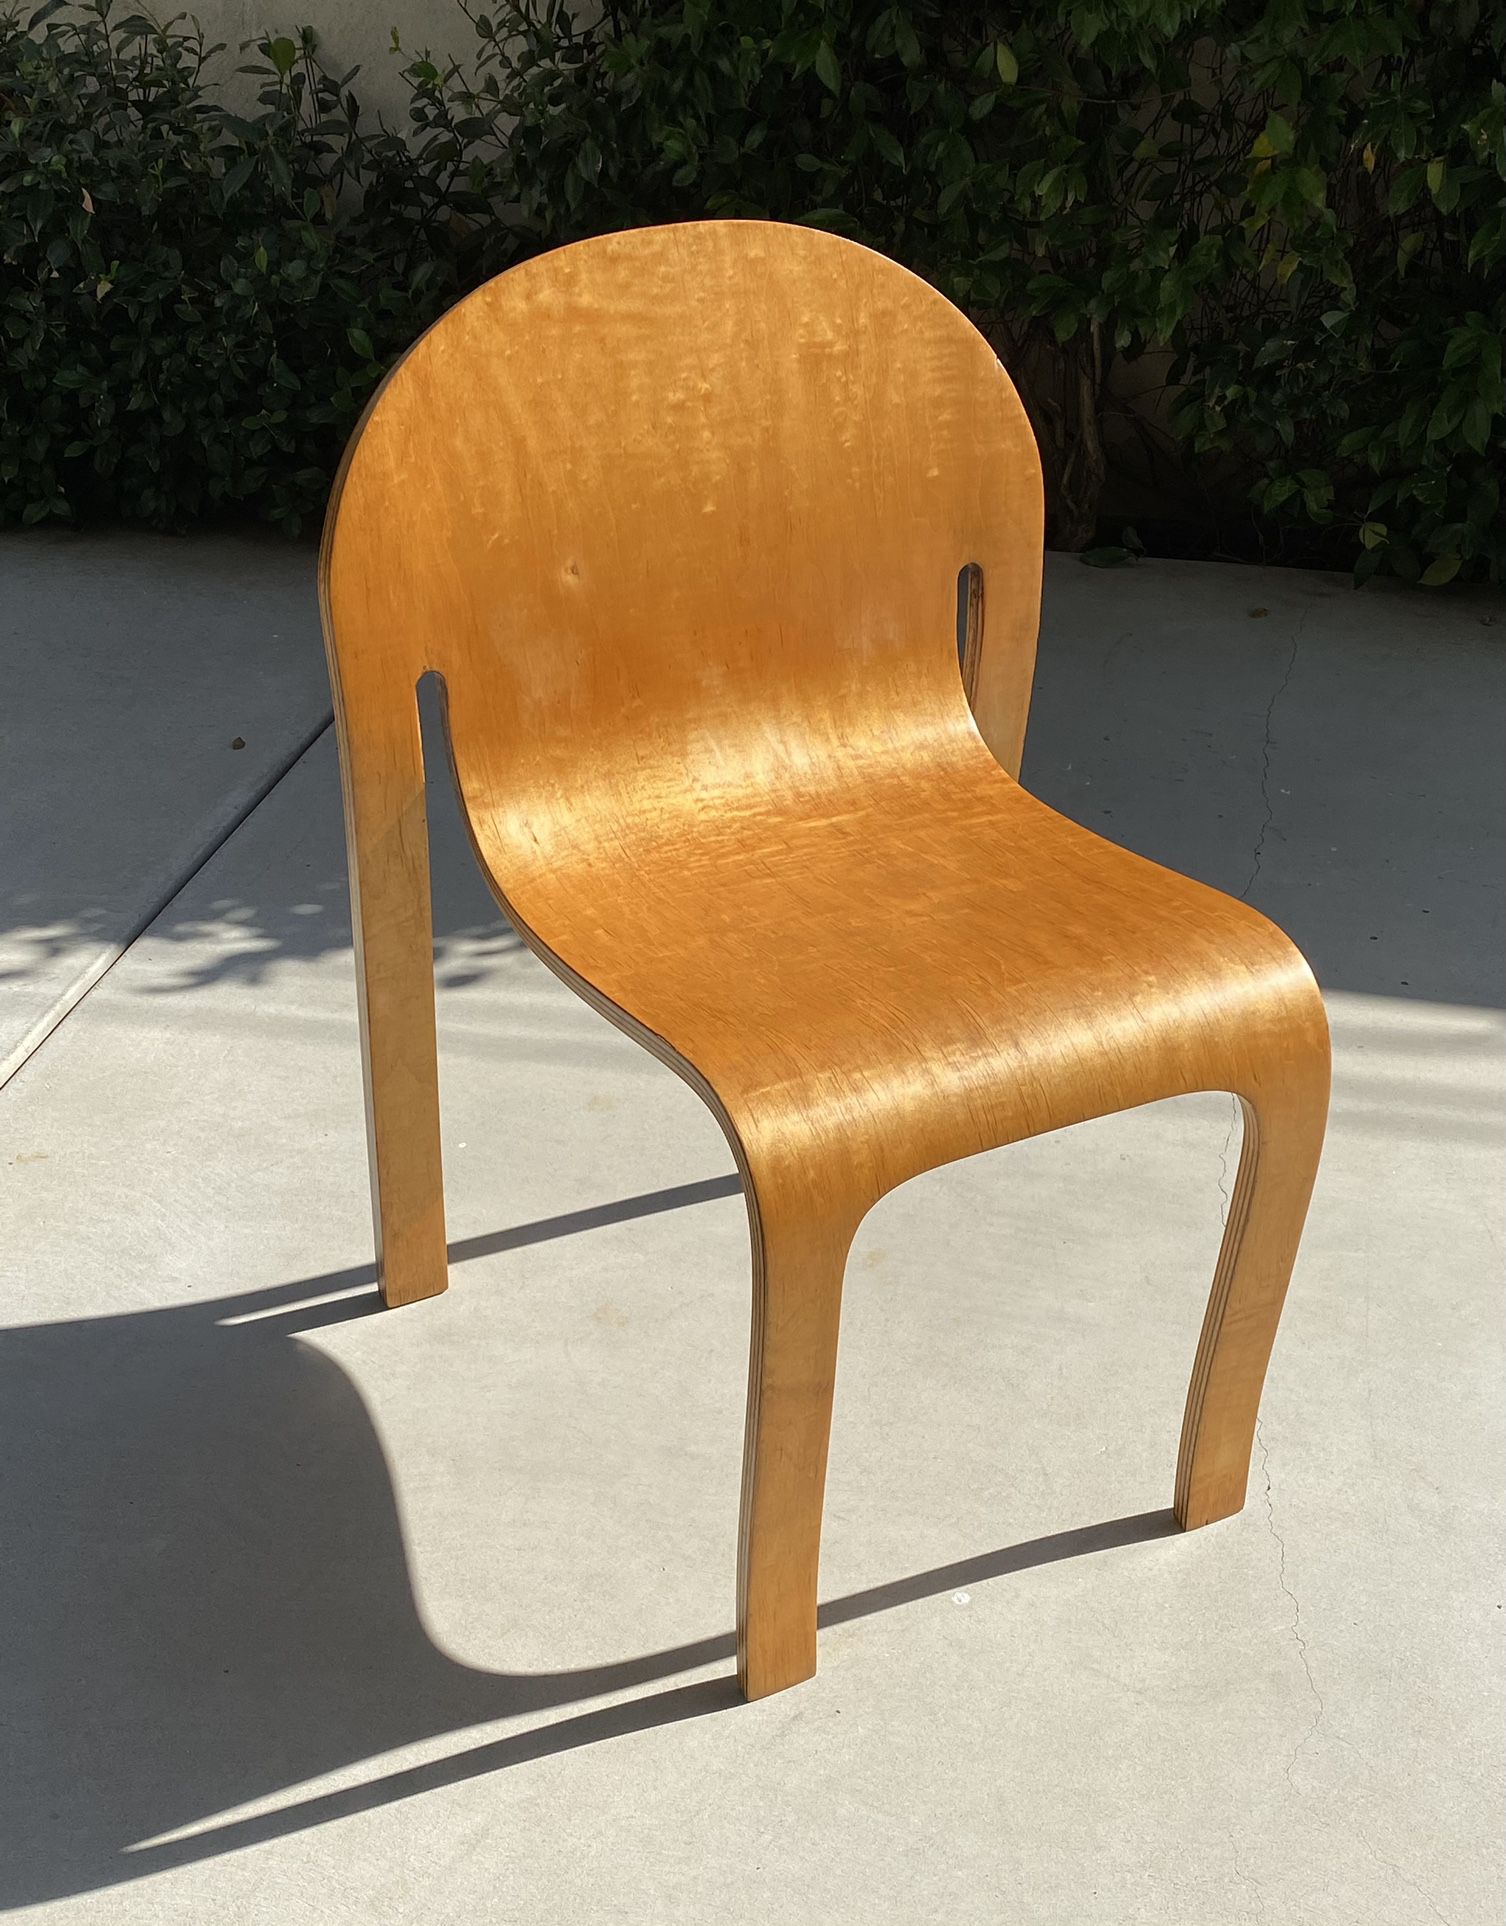 Peter Danko Post Modern Bodyform Chair c.1980